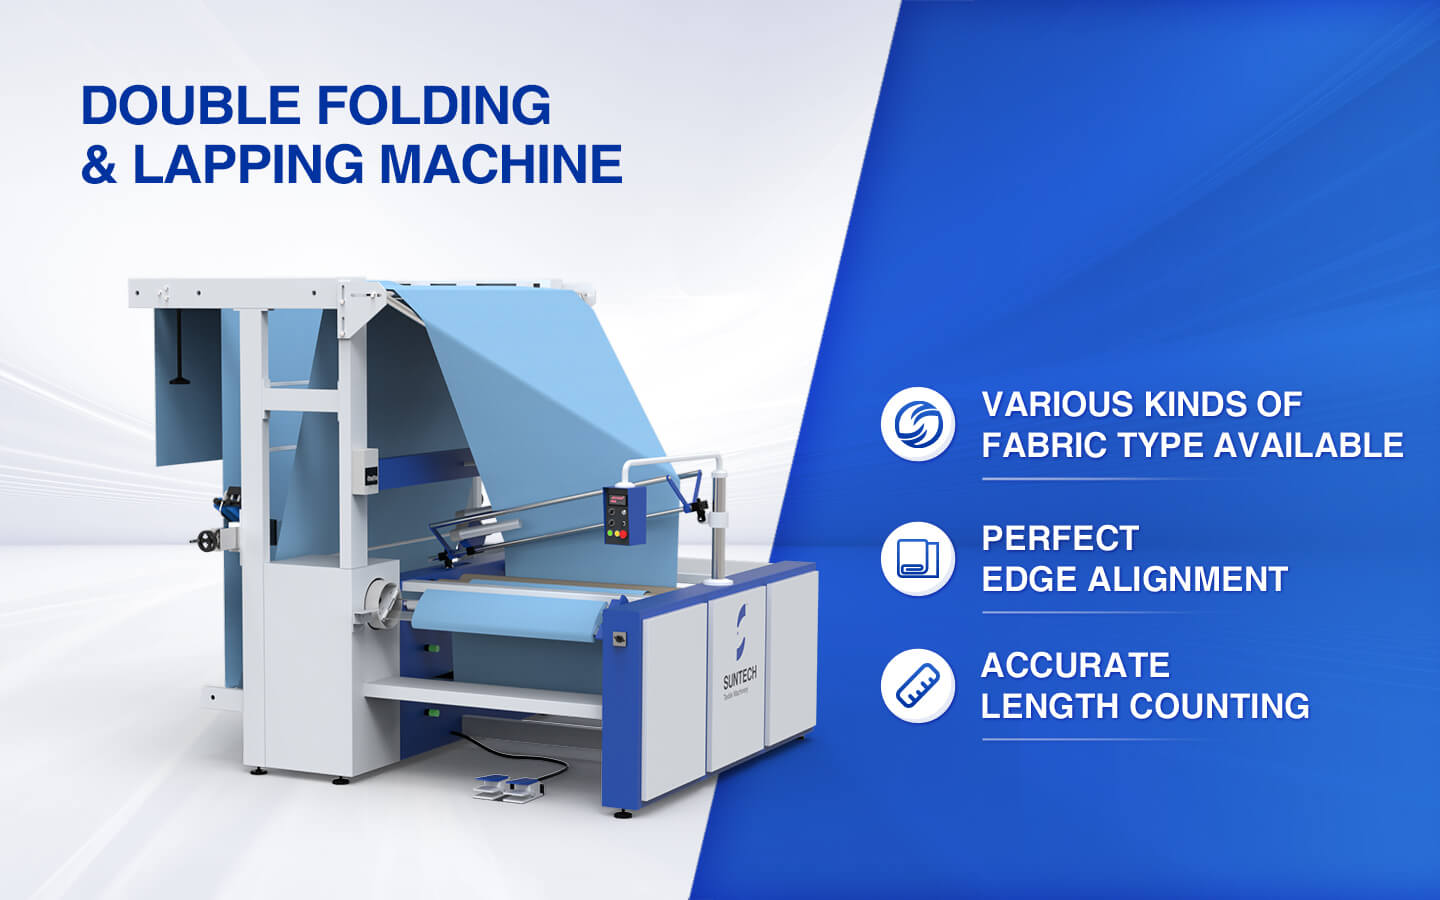 SUNTECH textile folding machine features